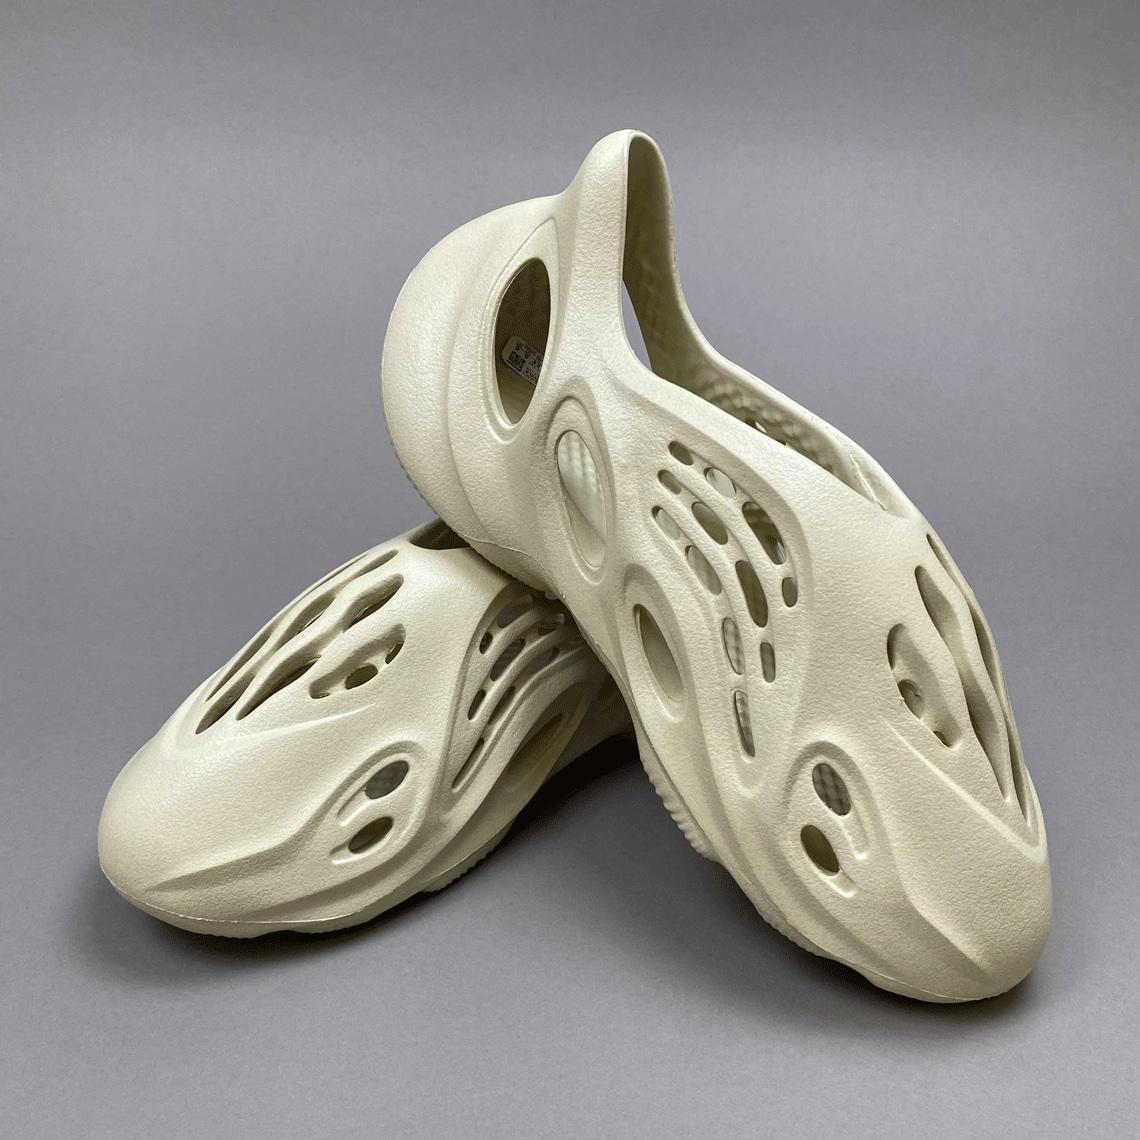 adidas Yeezy Foam Runner "Sand" Release Date | SneakerNews.com